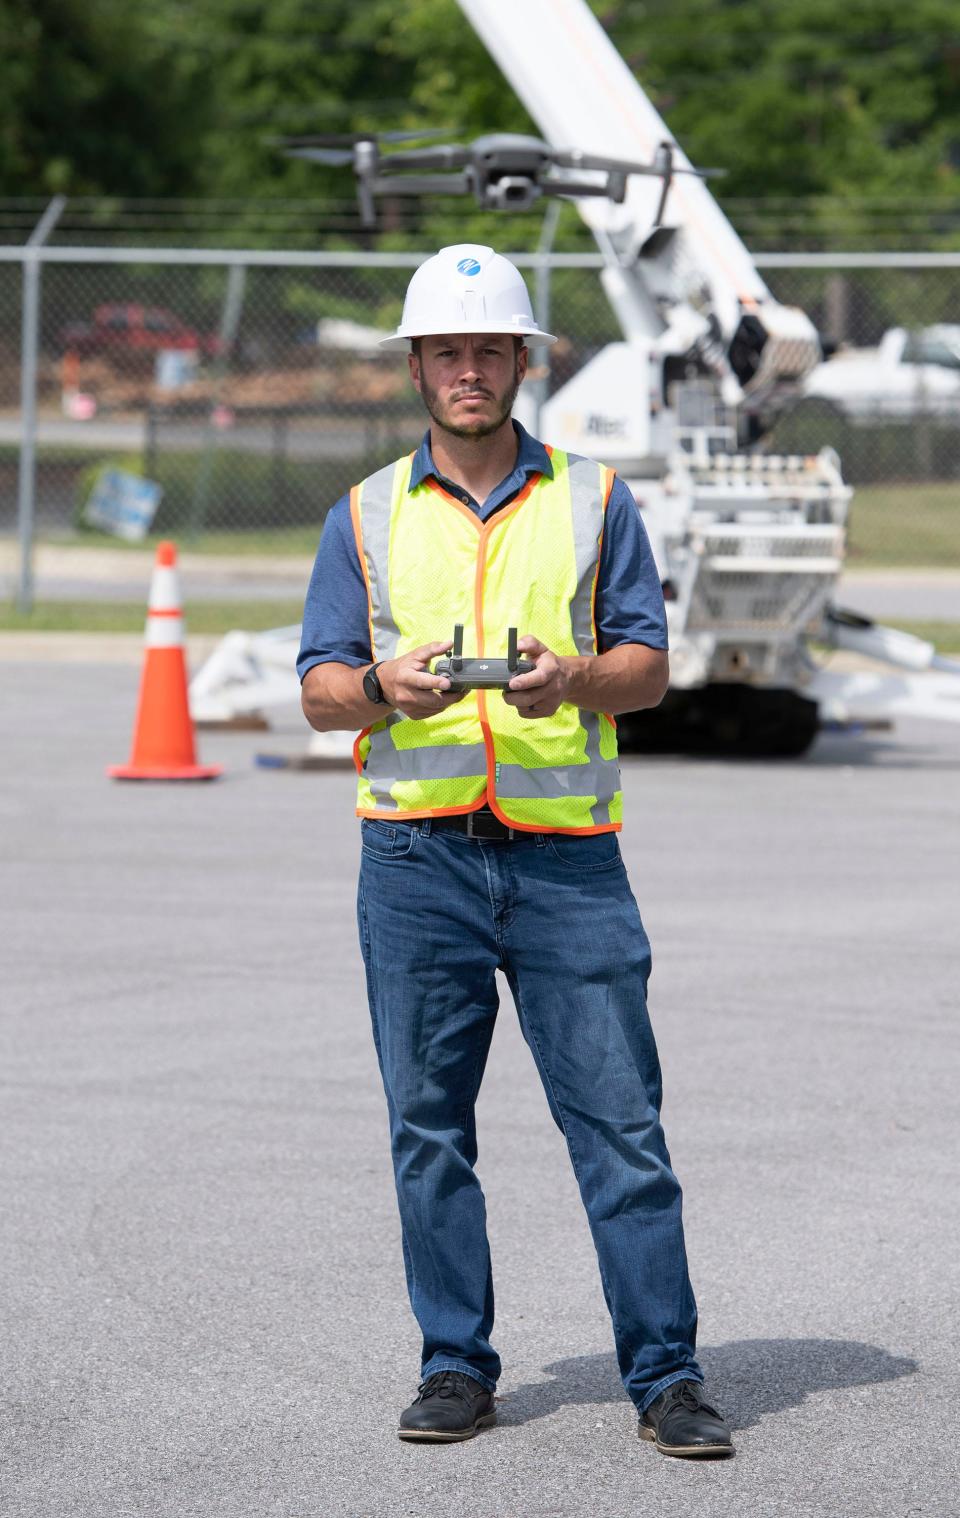 Florida Power & Light employee Mark Telhiard demonstrates the flight characteristics of one of the company's drones on Thursday.